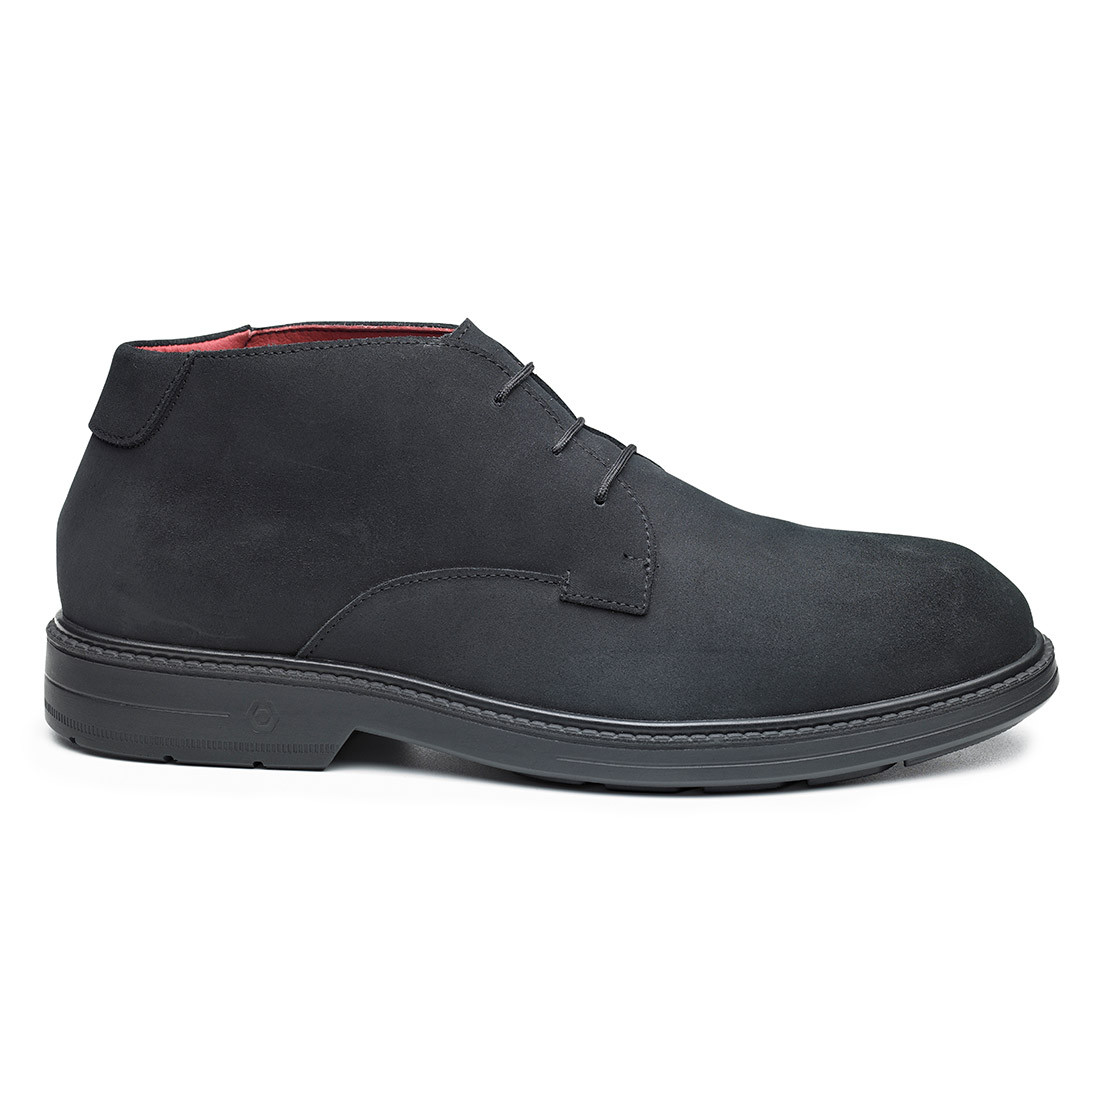 Pantofi Orbit S3 ESD SRC - Incaltaminte de protectie | Bocanci, Pantofi, Sandale, Cizme